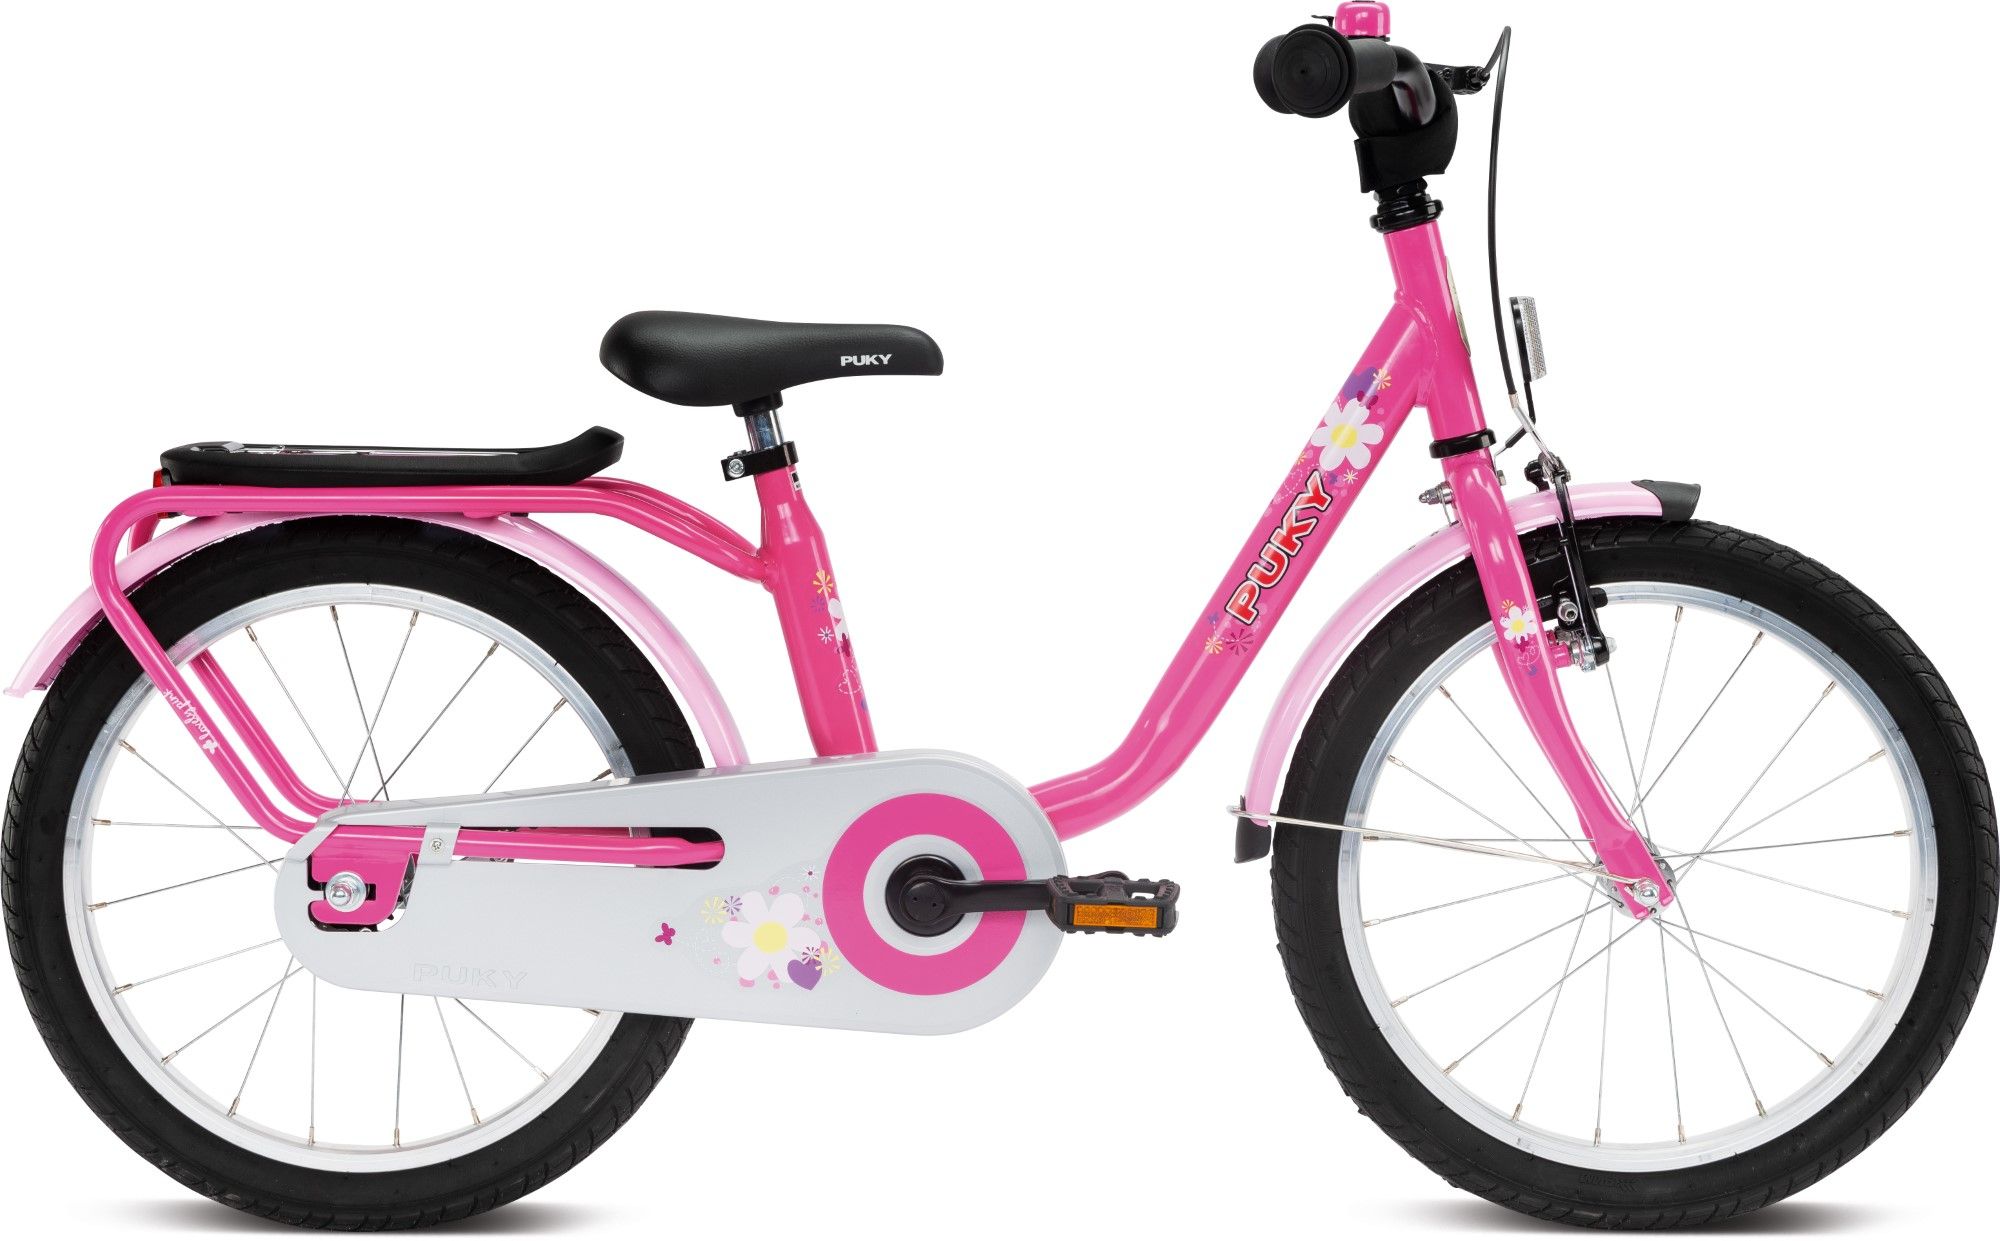 Puky STEEL 18 lovely pink - Fahrrad Online Shop